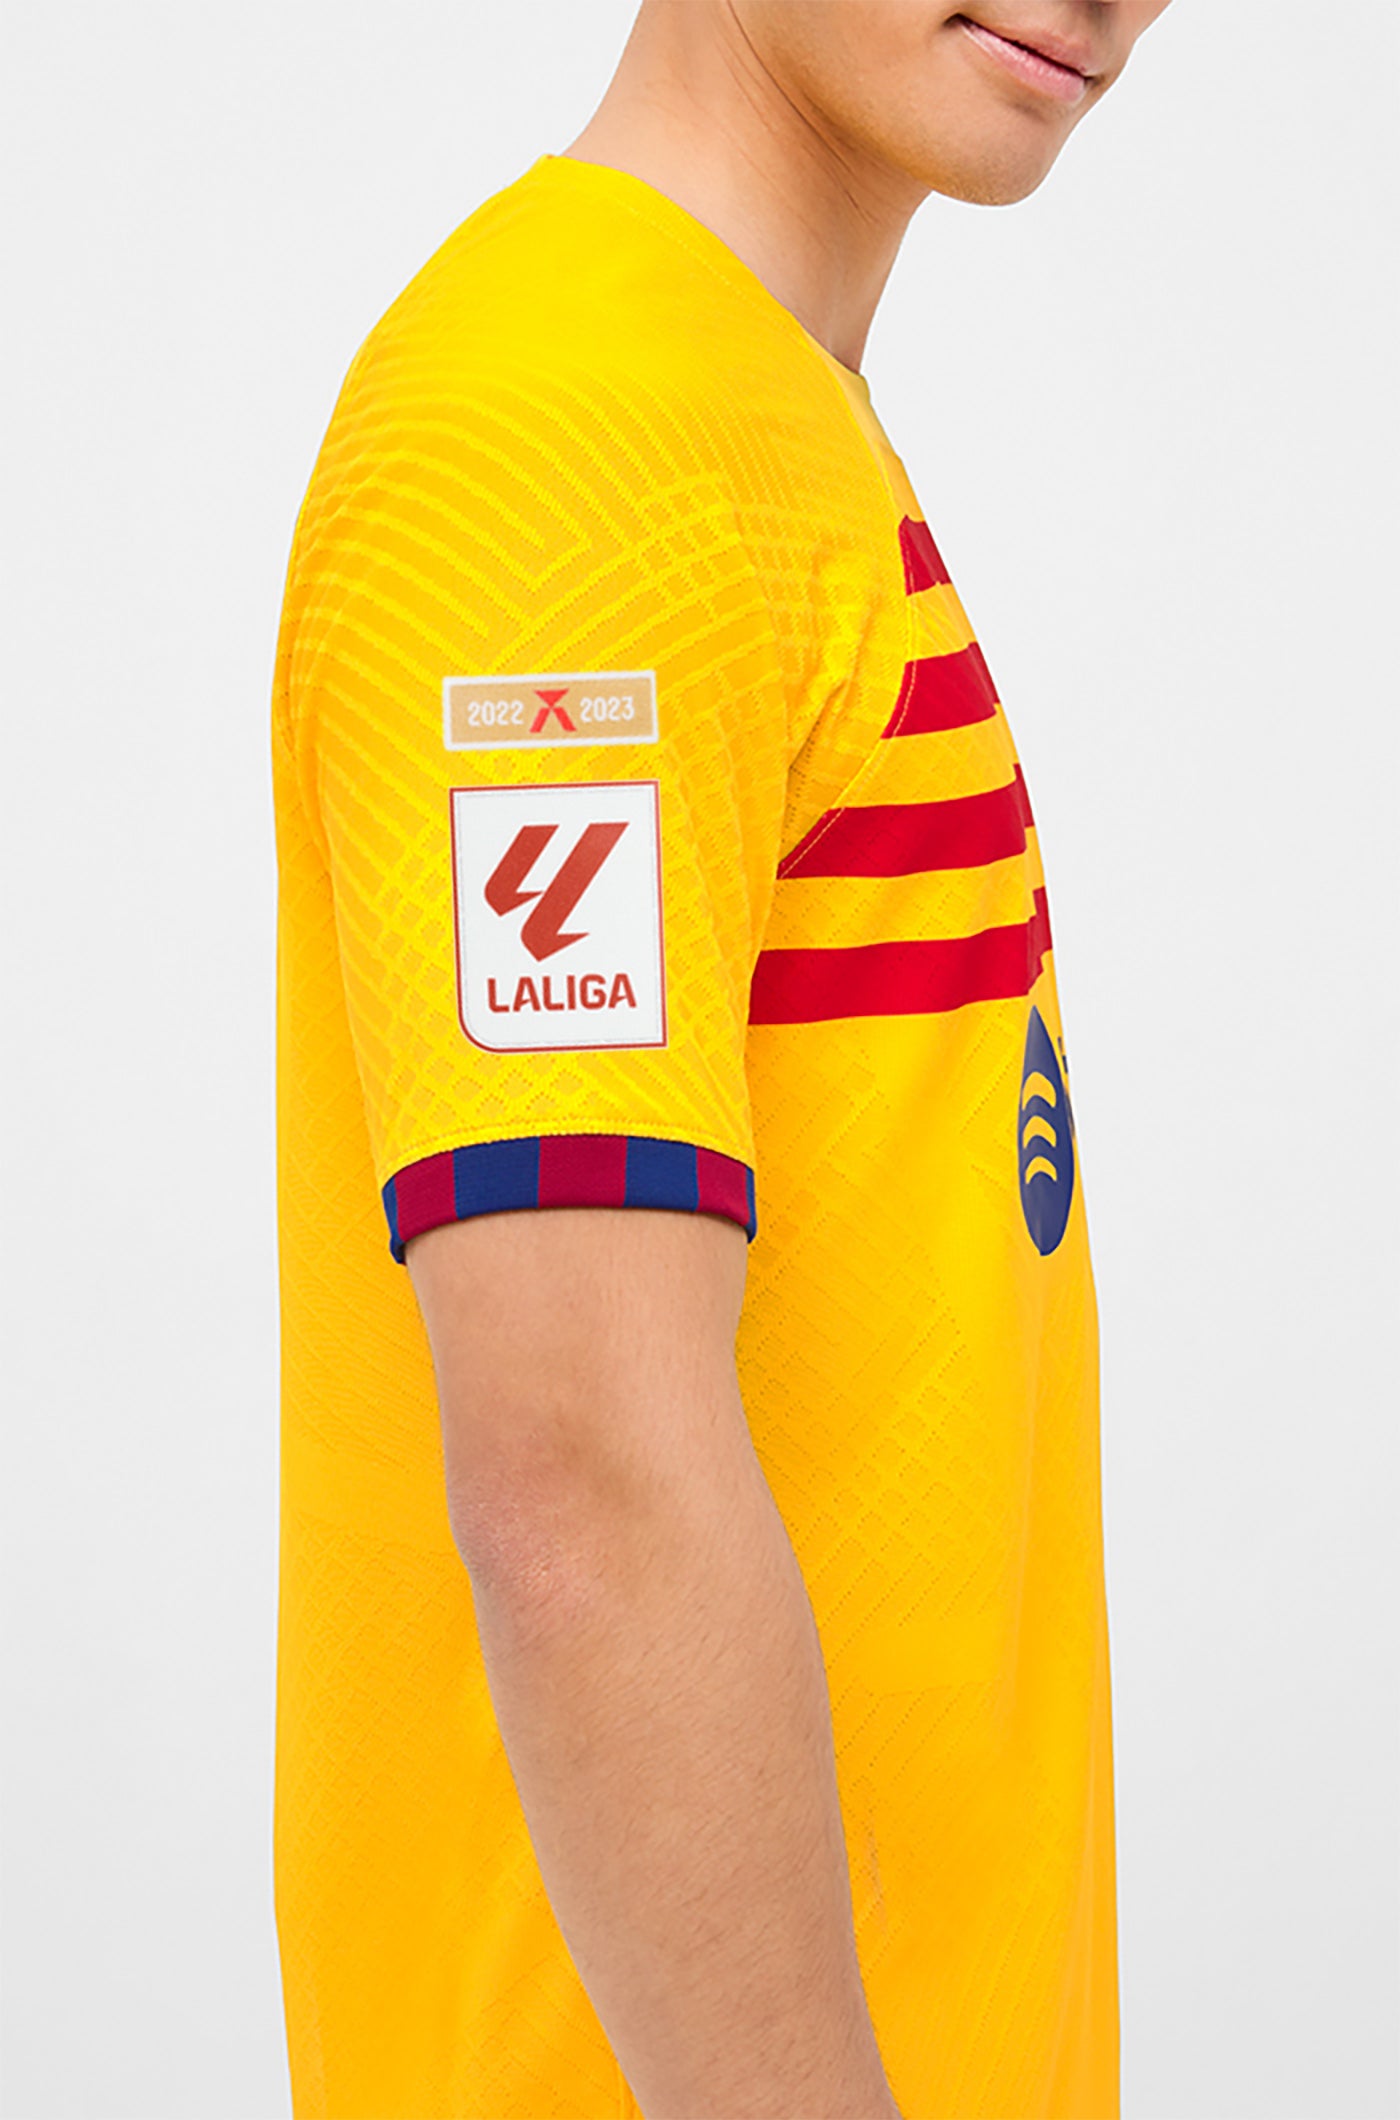 LFP FC Barcelona fourth shirt 23/24 Player’s Edition